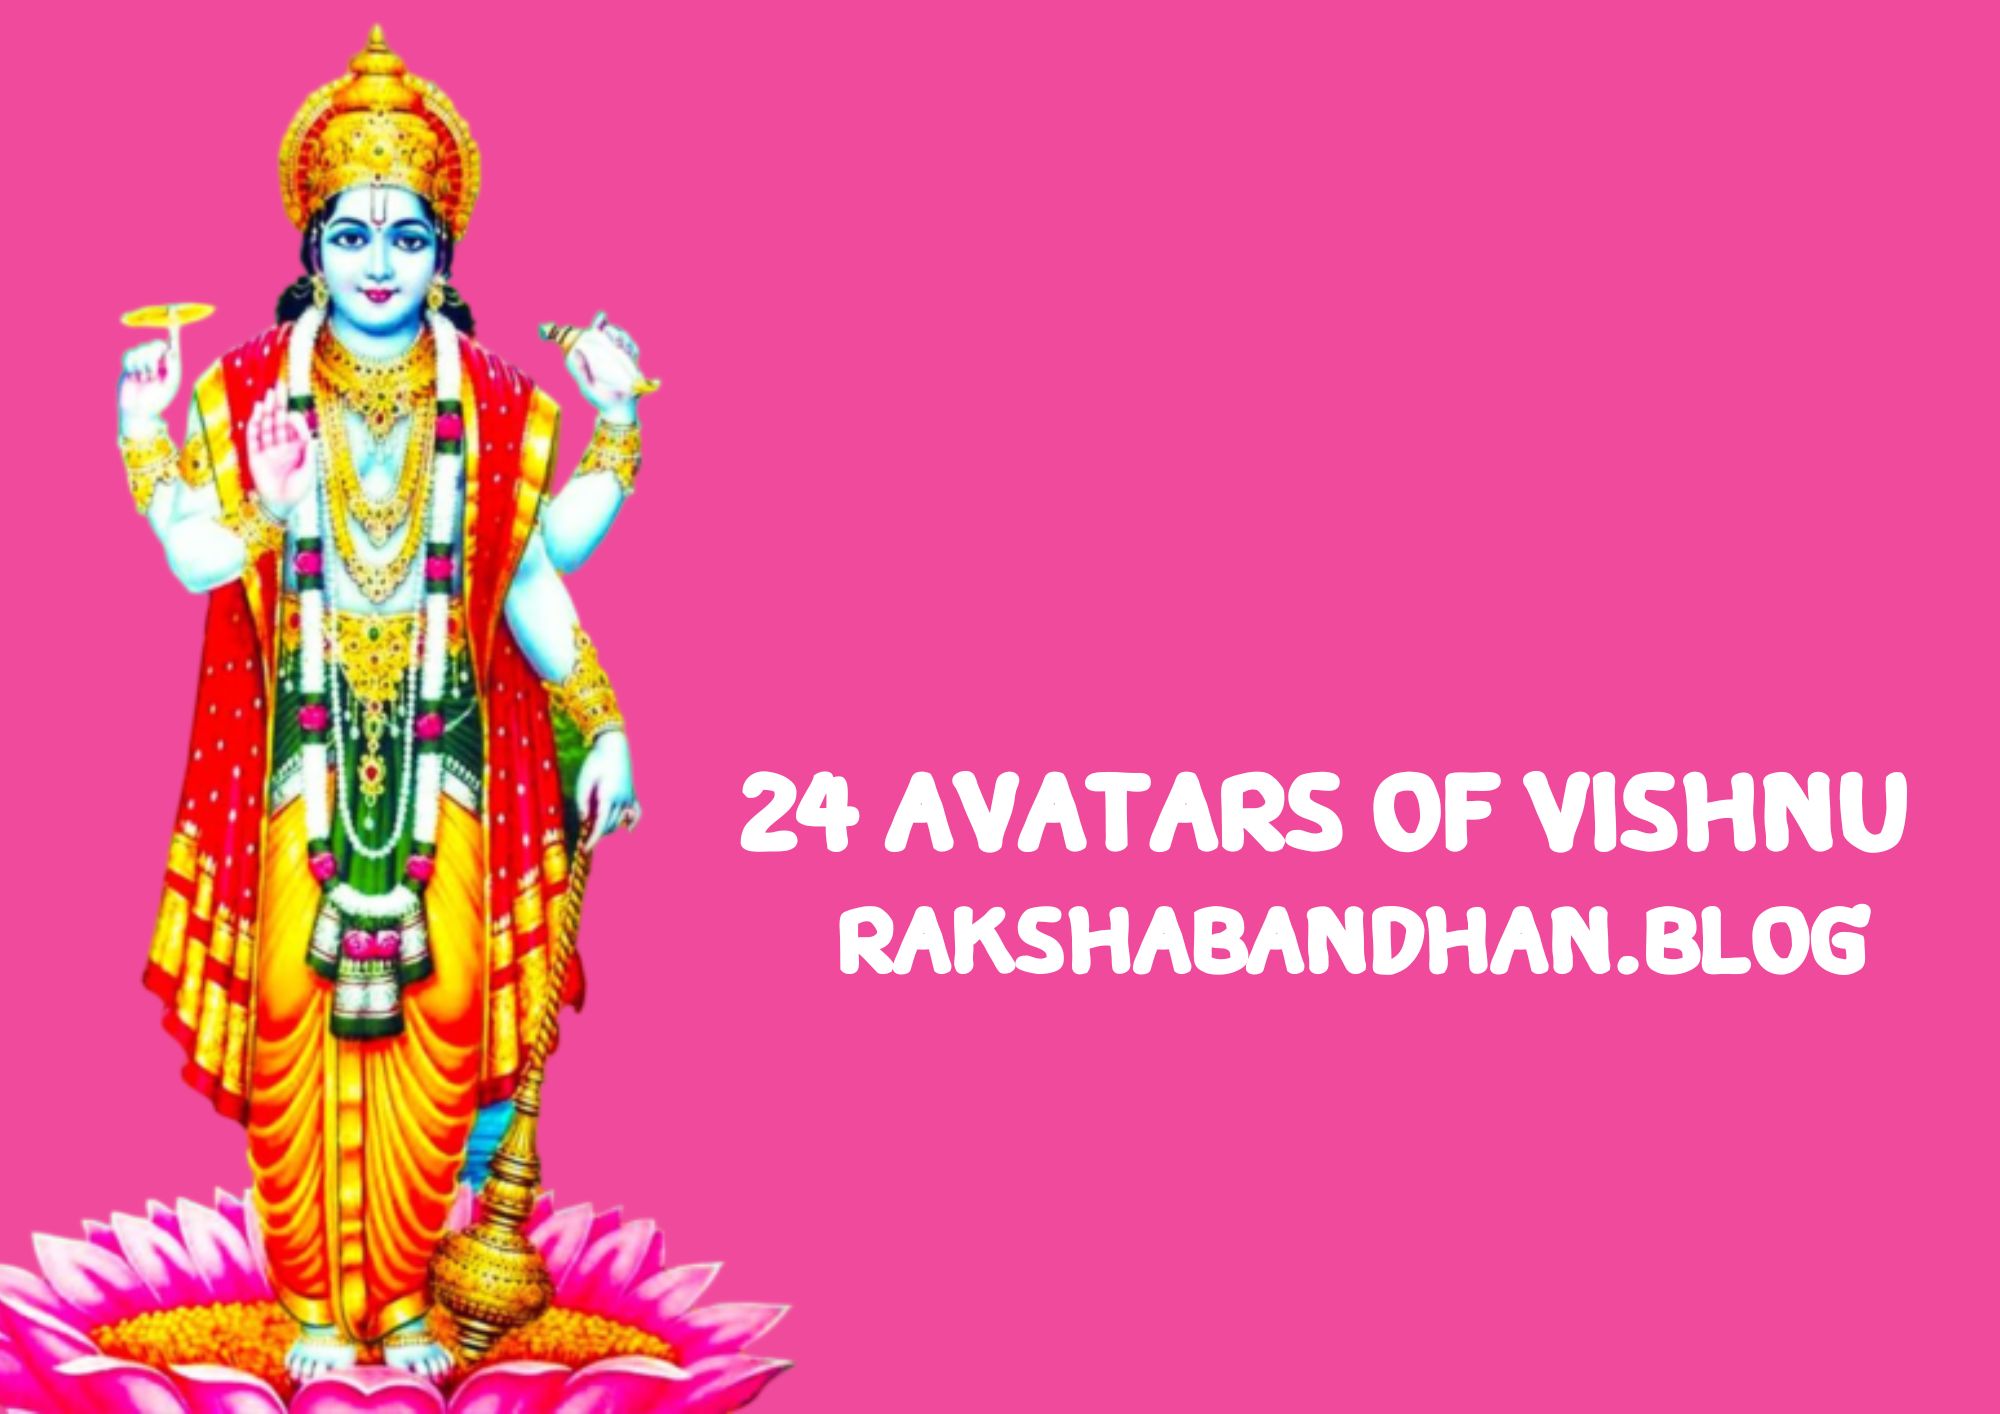 24 Avatars Of Vishnu With Names (What Are The 24 Avatars Of Lord Vishnu) - Lord Vishnu 24 Avatars List (24 Avatars Of Vishnu In Order)